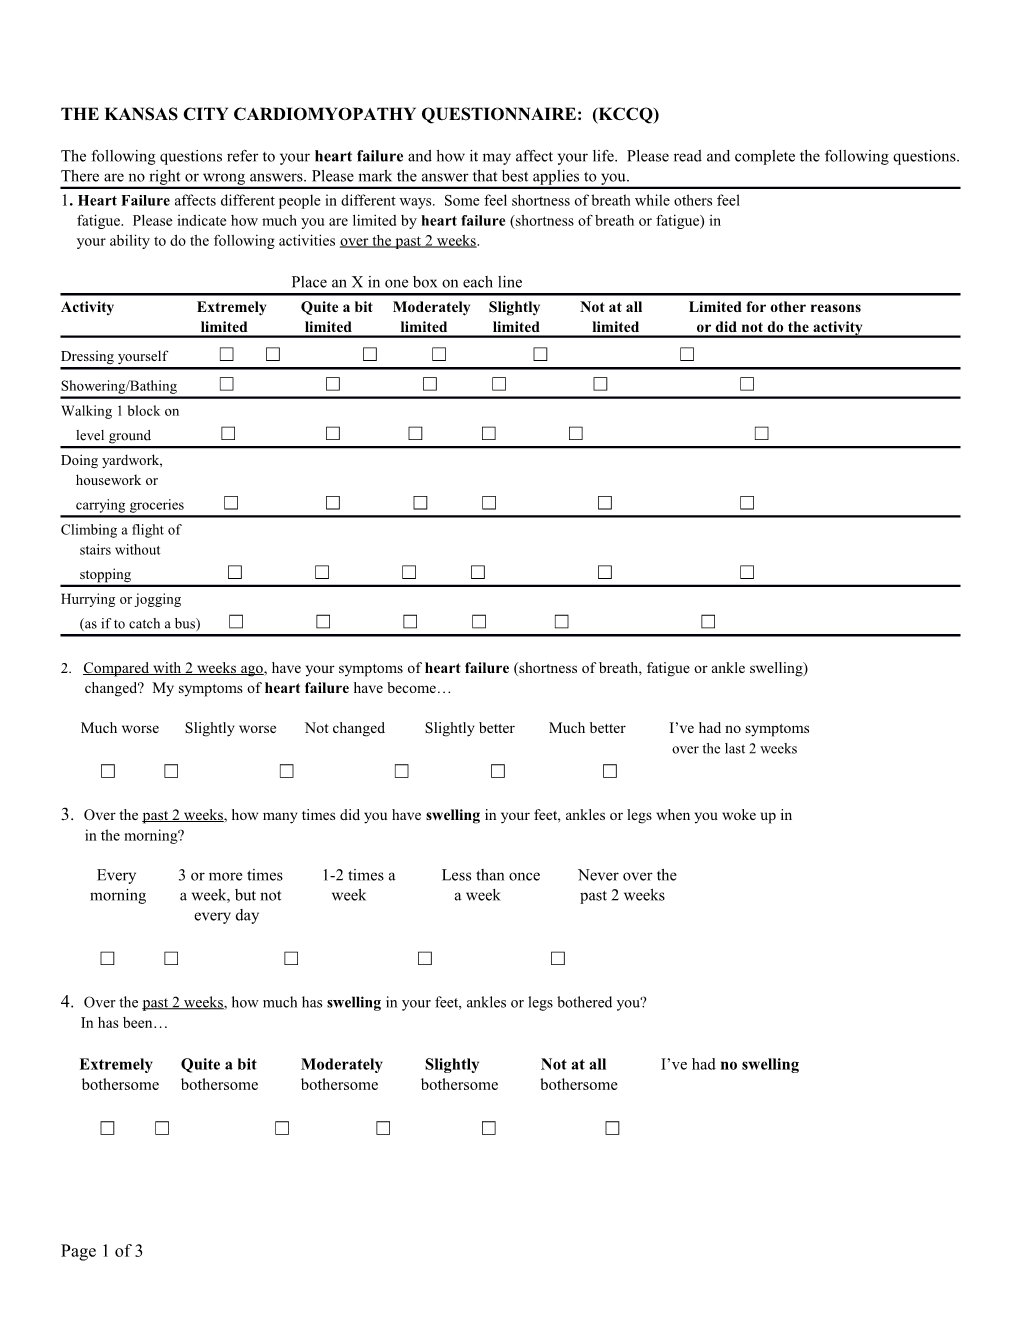 The Kansas City Cardiomyopathy Questionnaire: (Kccq)